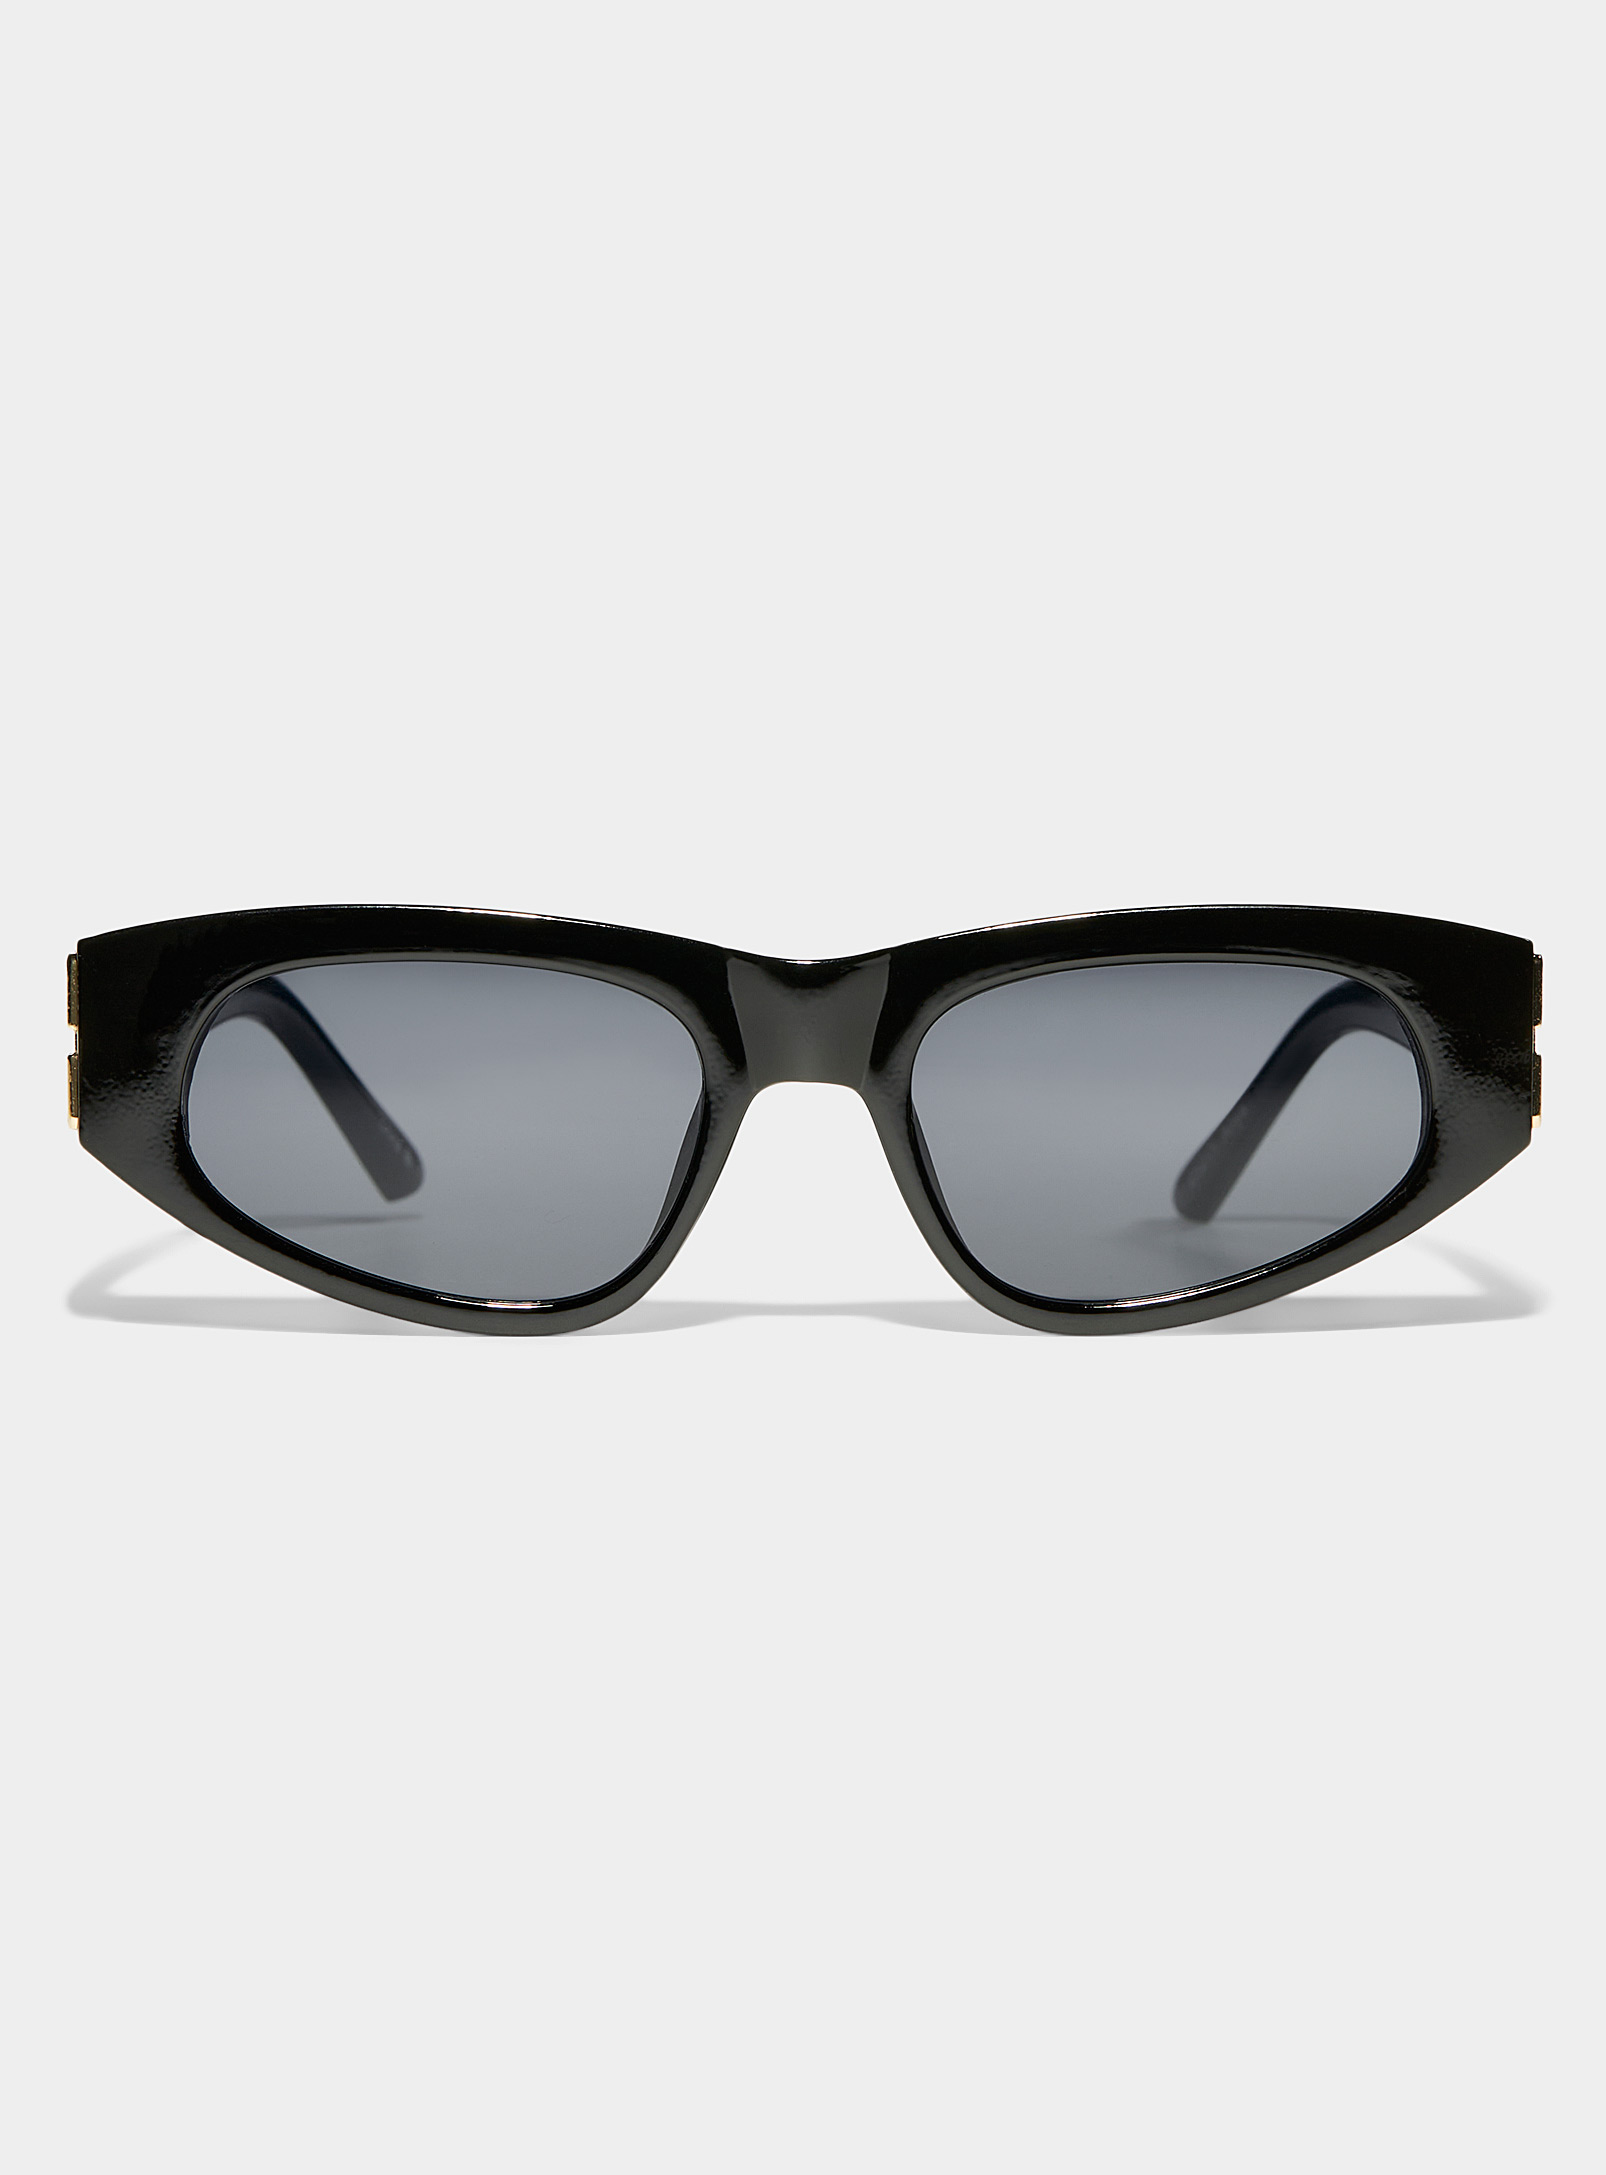 Simons - Women's Anya oval sunglasses